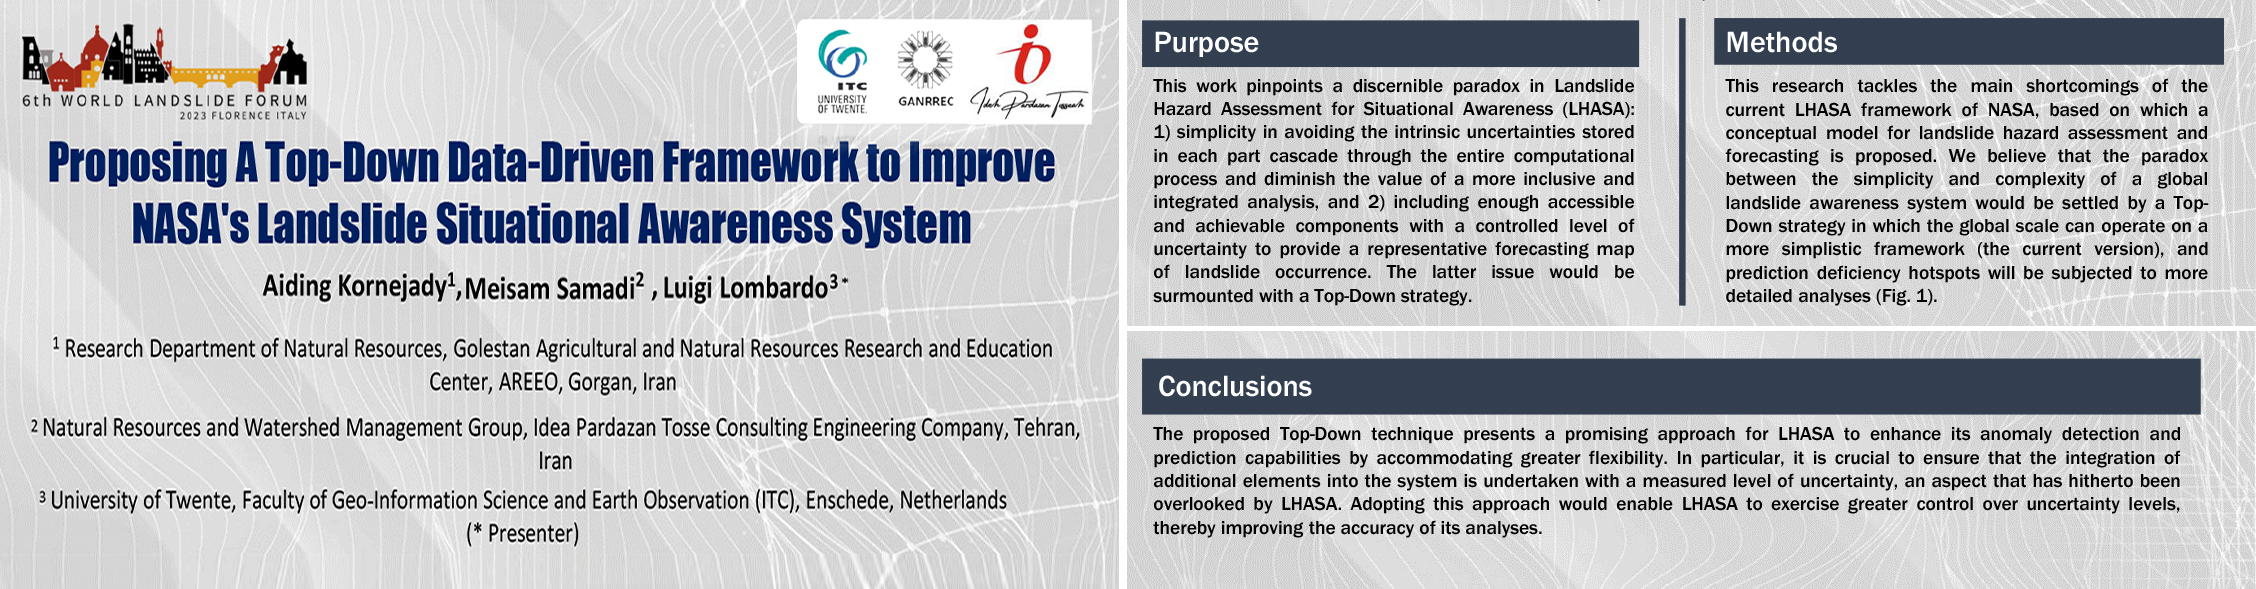 proposing-a-top-down-data-driven-framework-to-improve-nasa's-landslide-situational-awareness-system